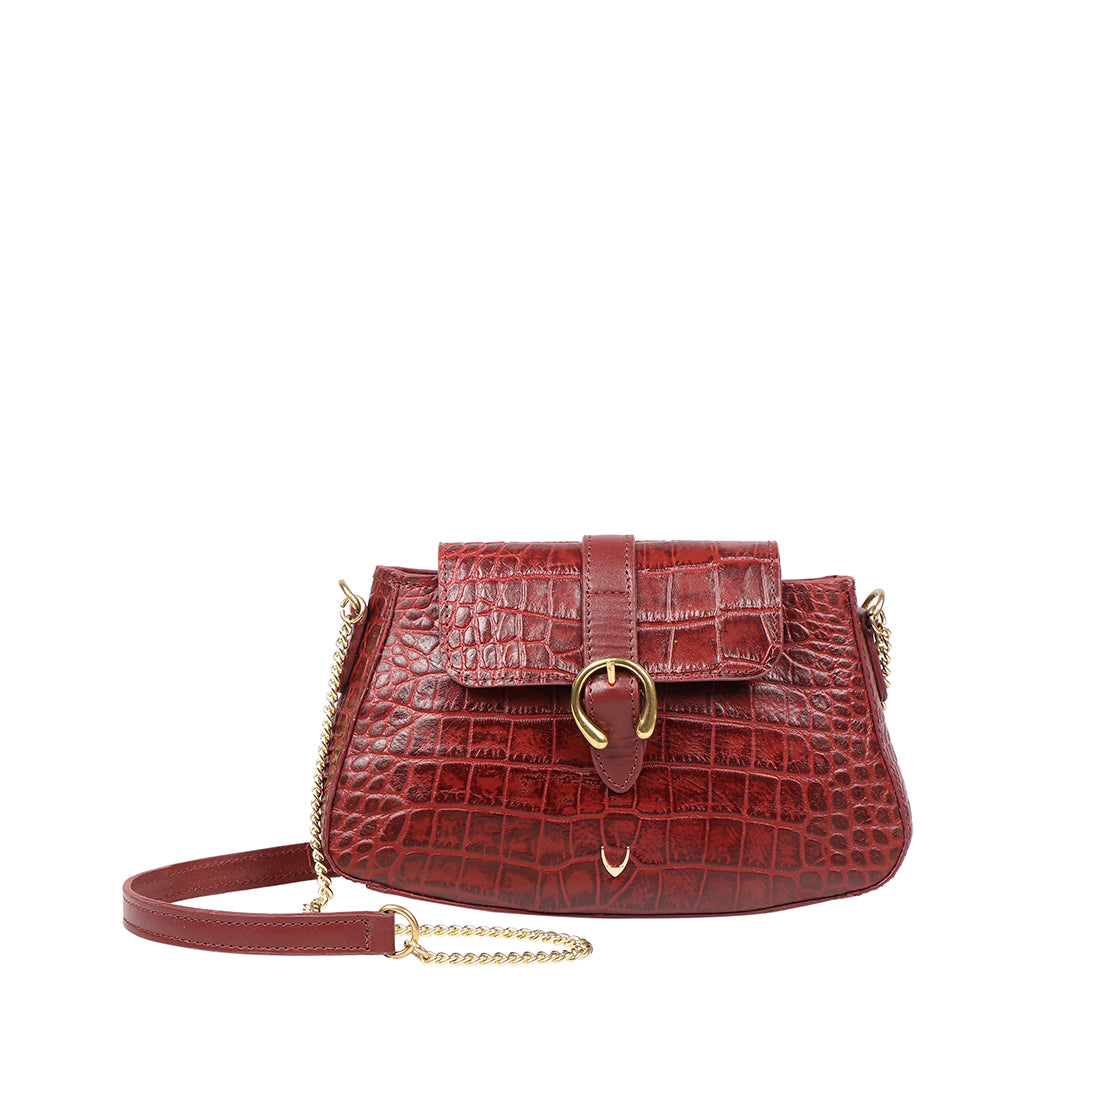 Buy Marsala Fiona 03 Sling Bag Online - Hidesign